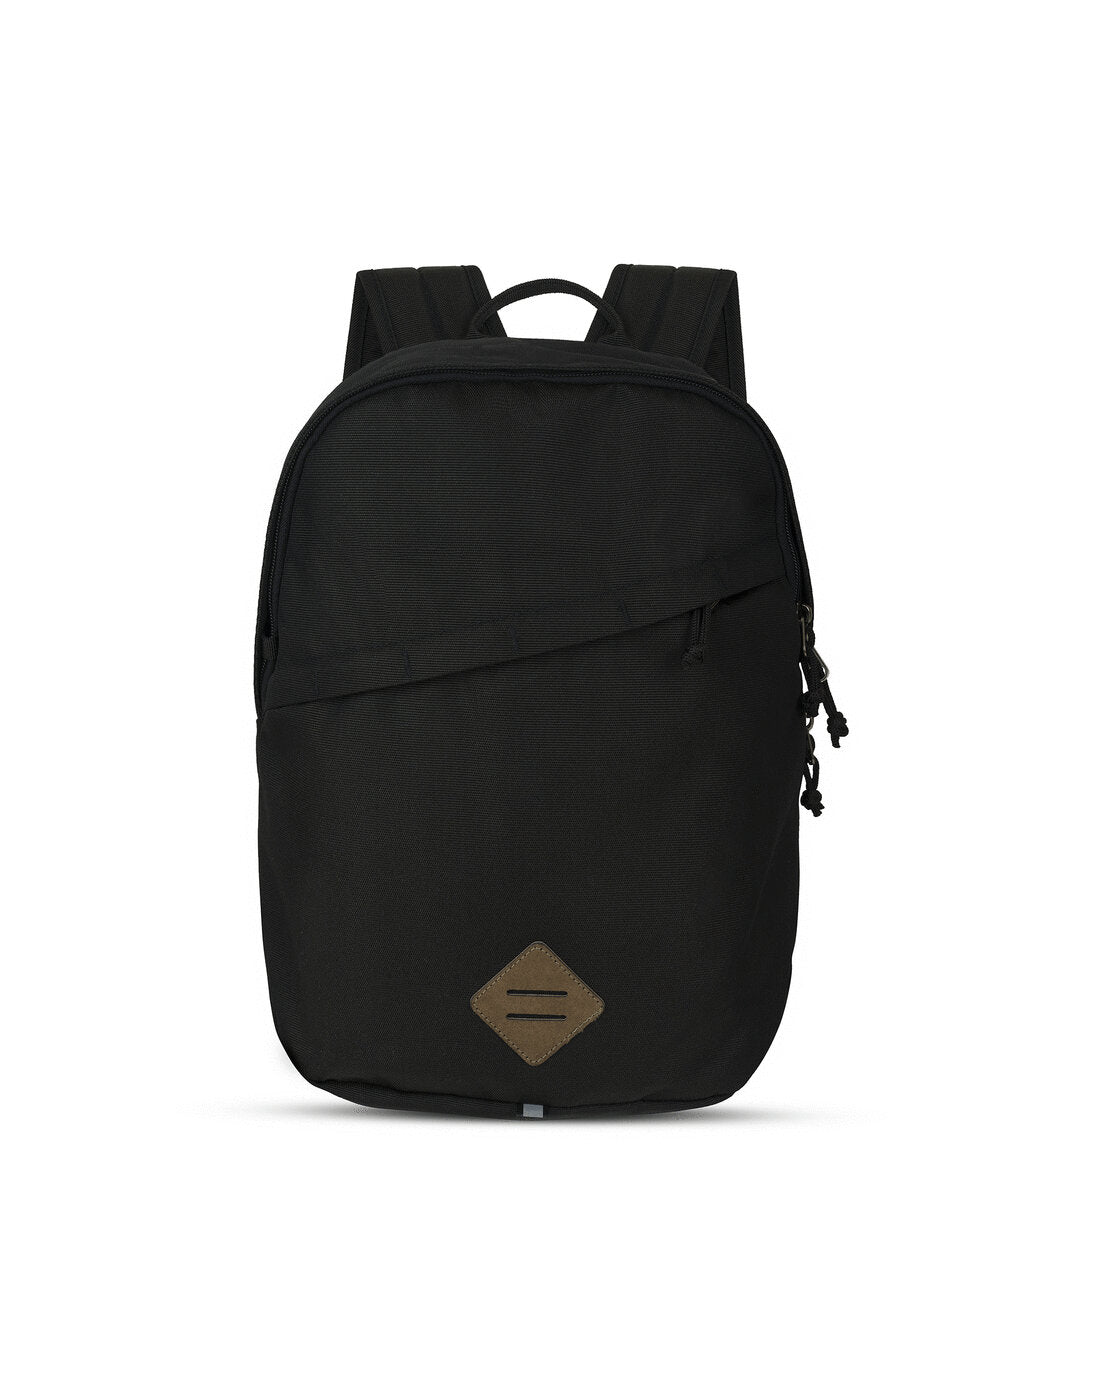 CRAGHOPPER 14l Expert Kiwi Backpack - Lynendo Trade Store